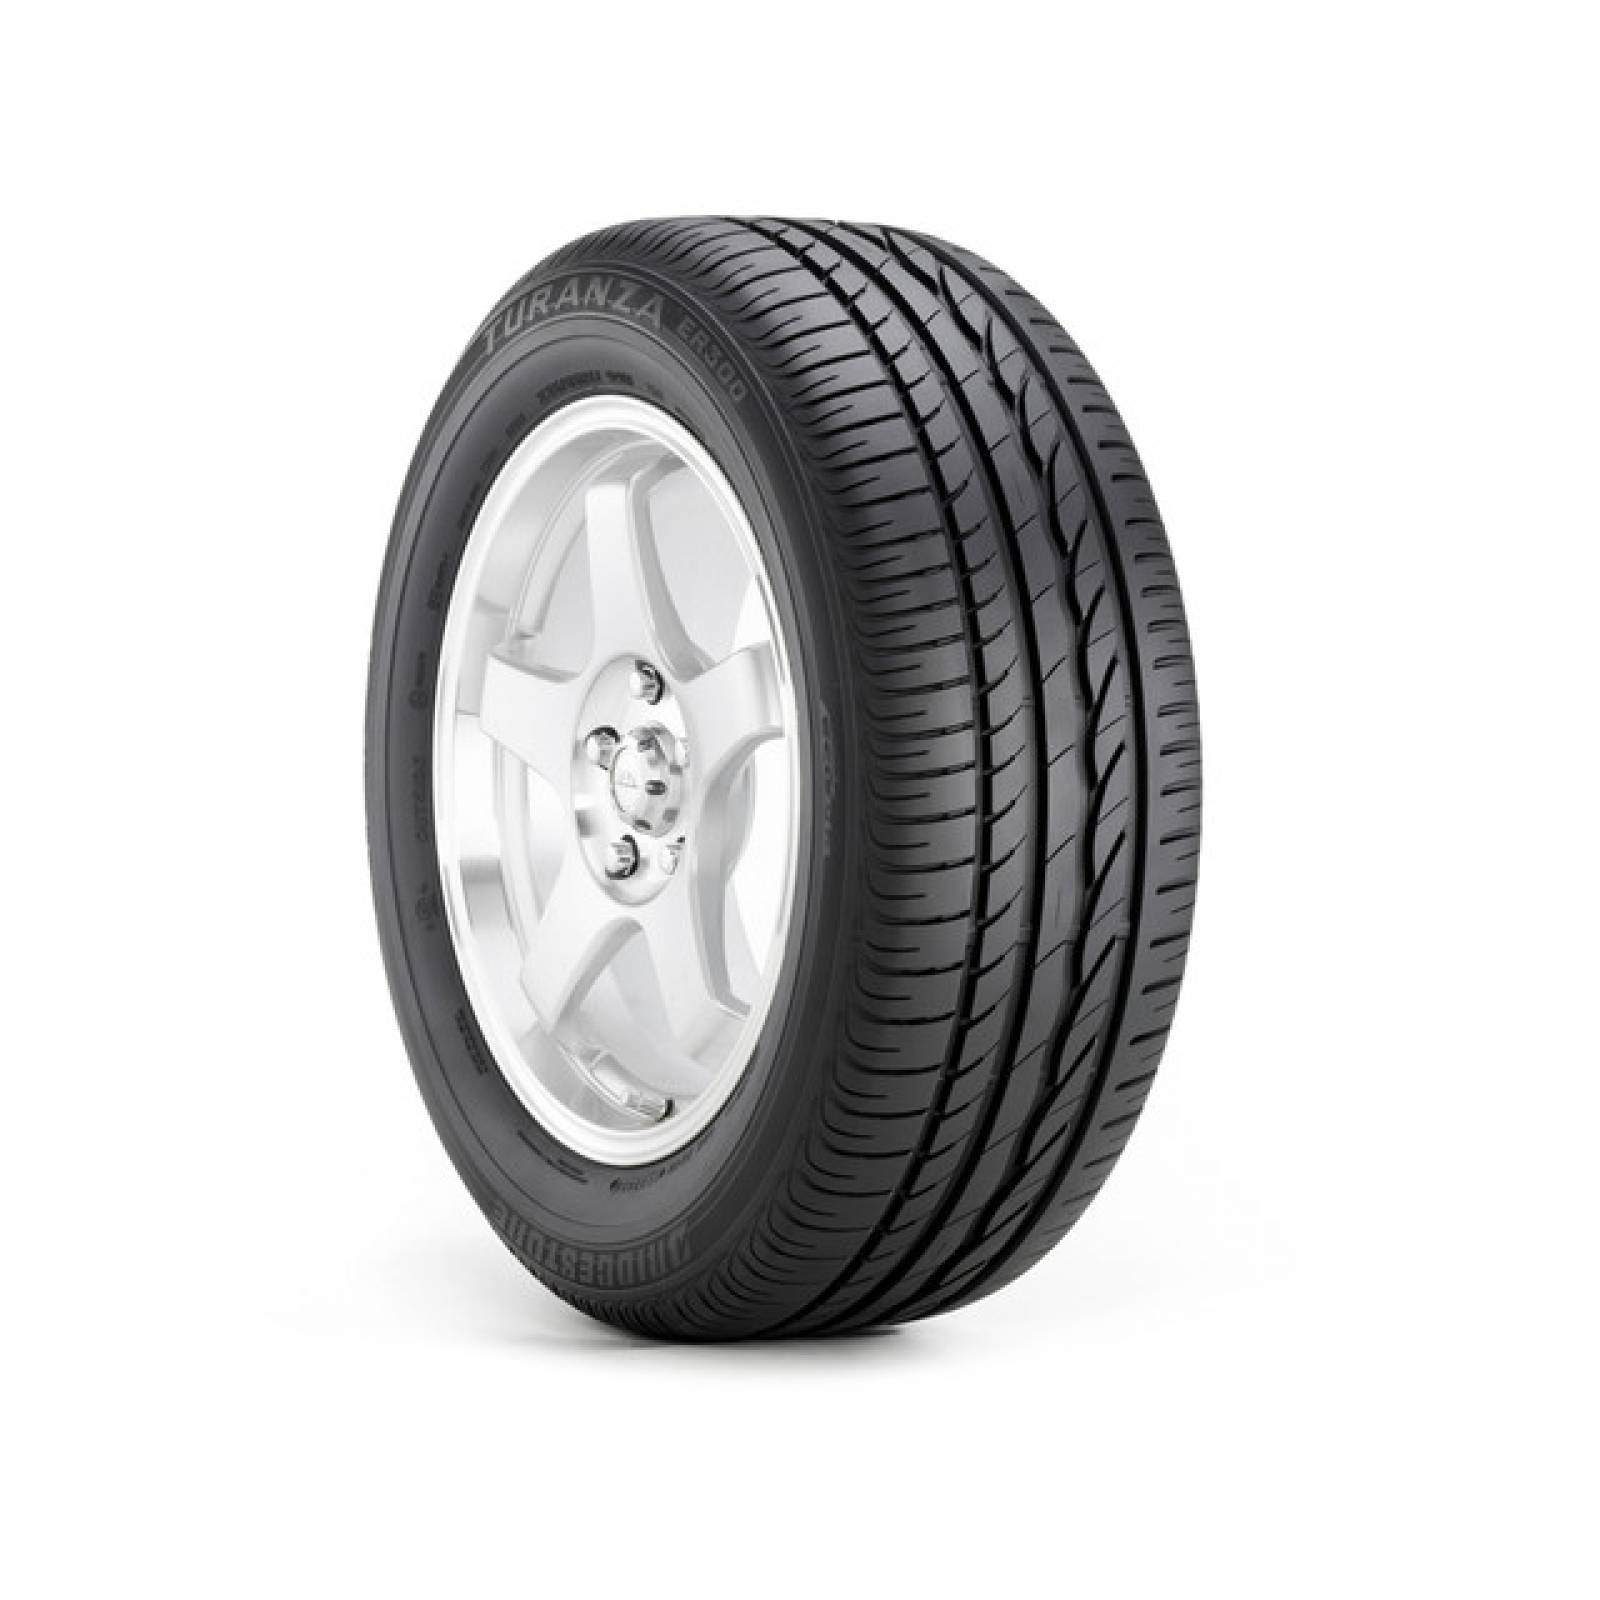 Neumático 205/55r16 91v Bridgestone Turanza Er300 Ahora 12